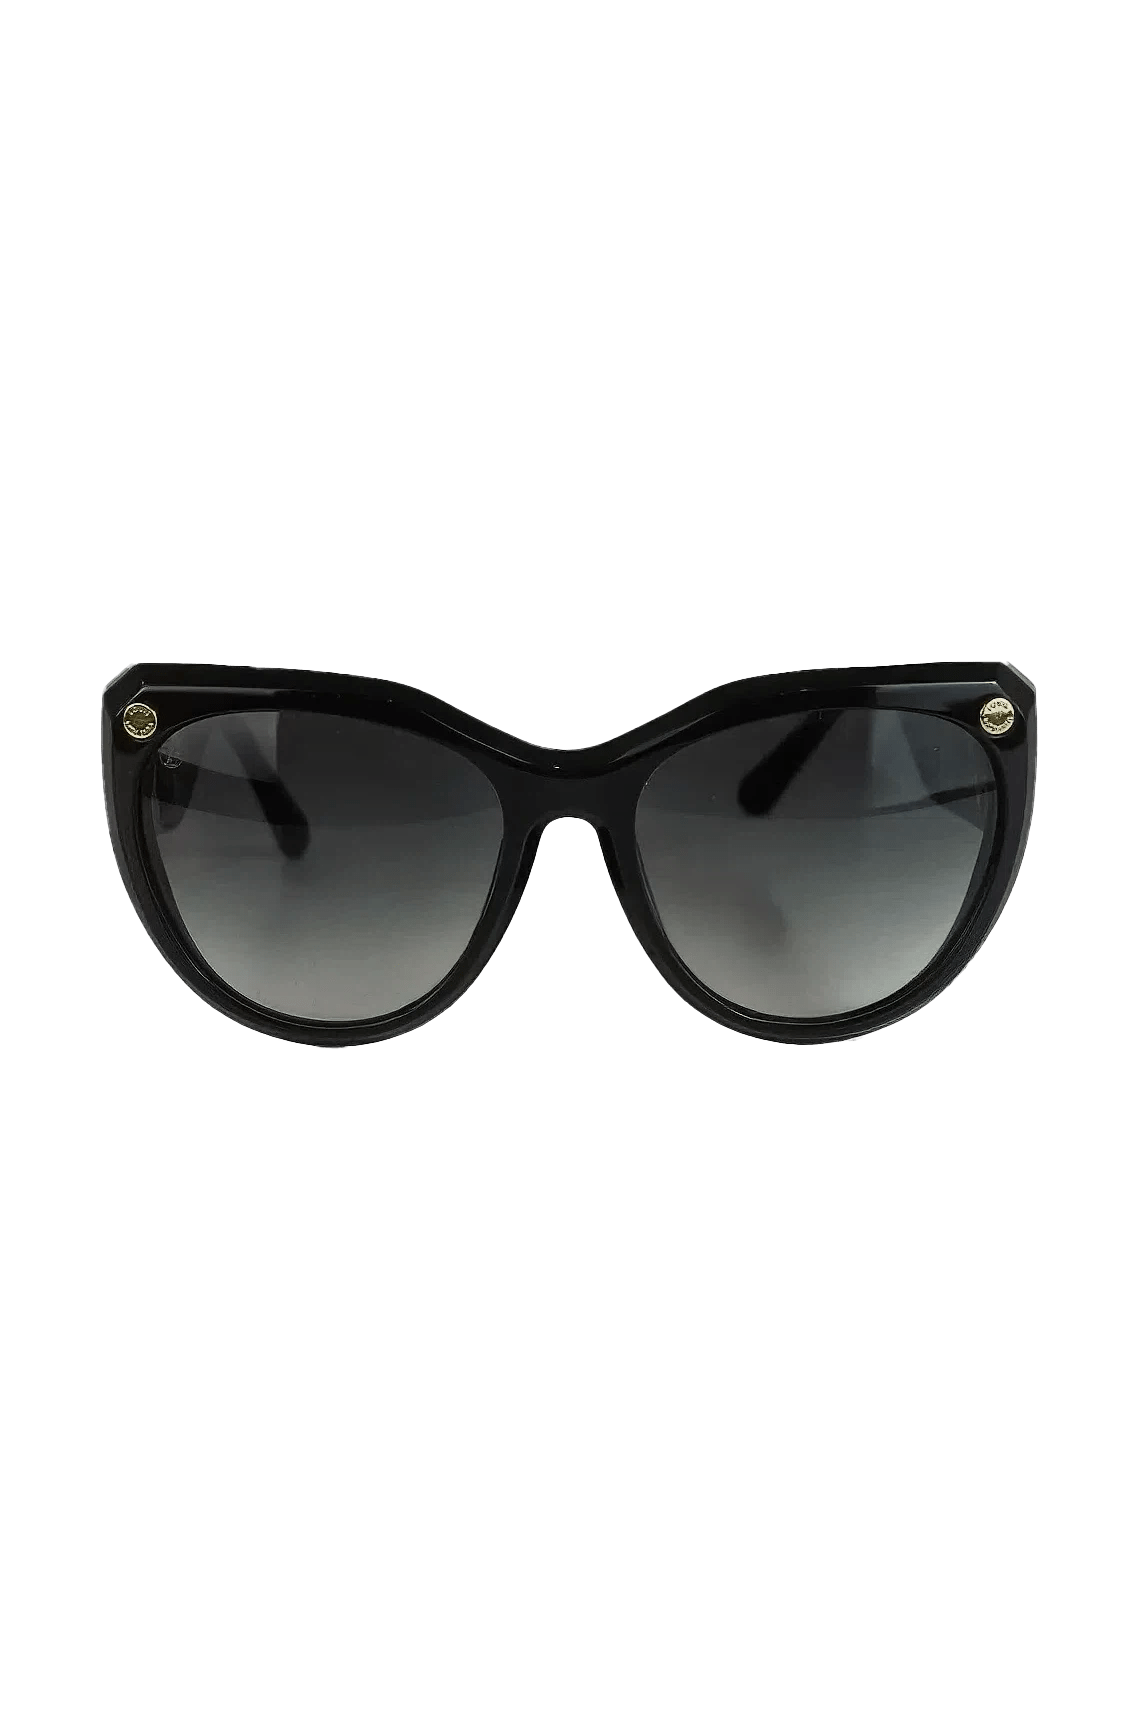 Louis Vuitton My Fair Lady Sunglasses 2020 - Foxy Couture Carmel